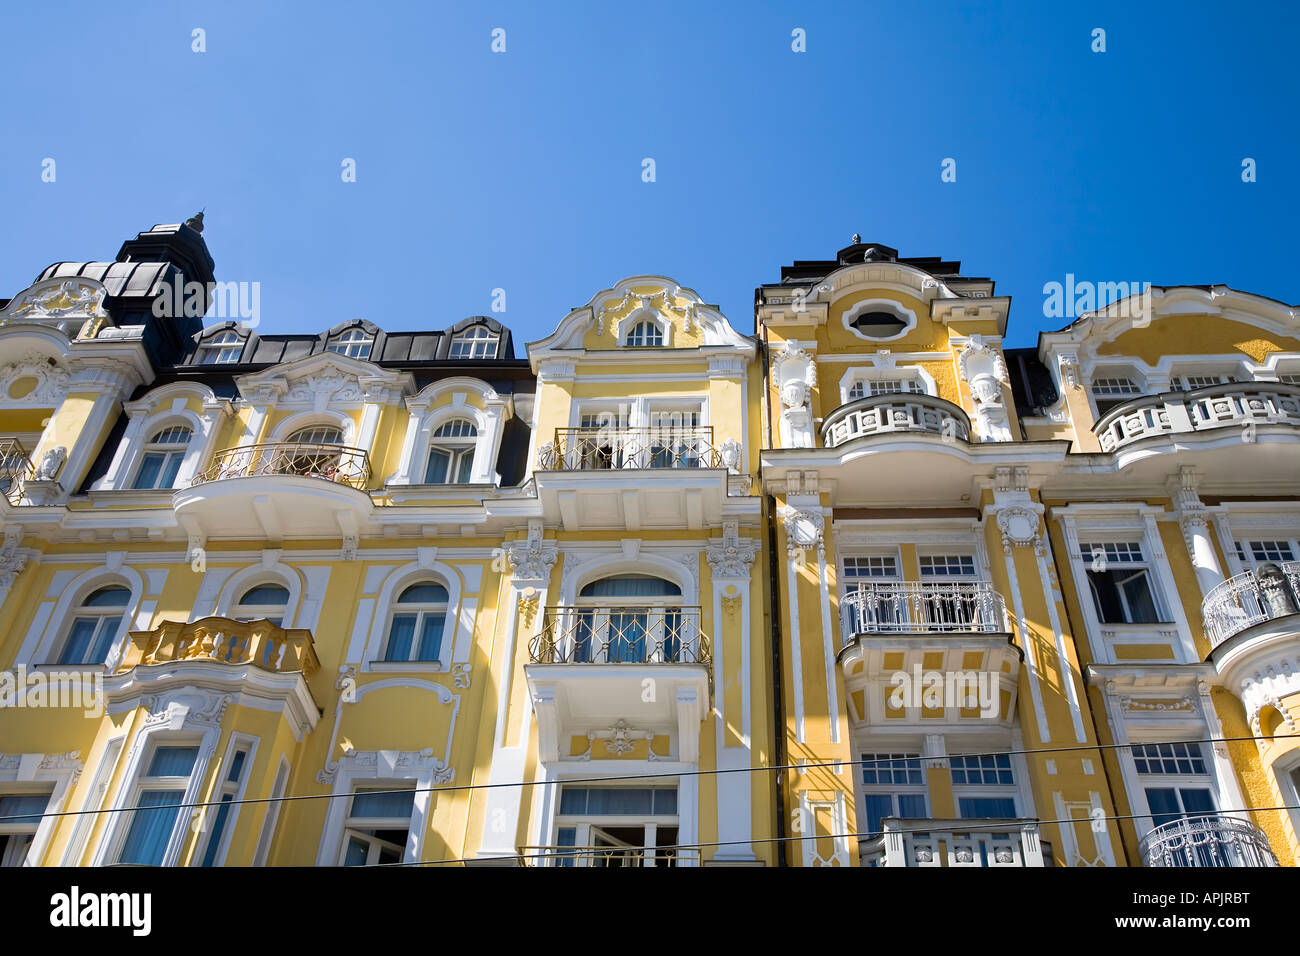 Architecture with balconies and distinctive white and yellow plasterwork Marianske Lazne Czech Republic Stock Photo